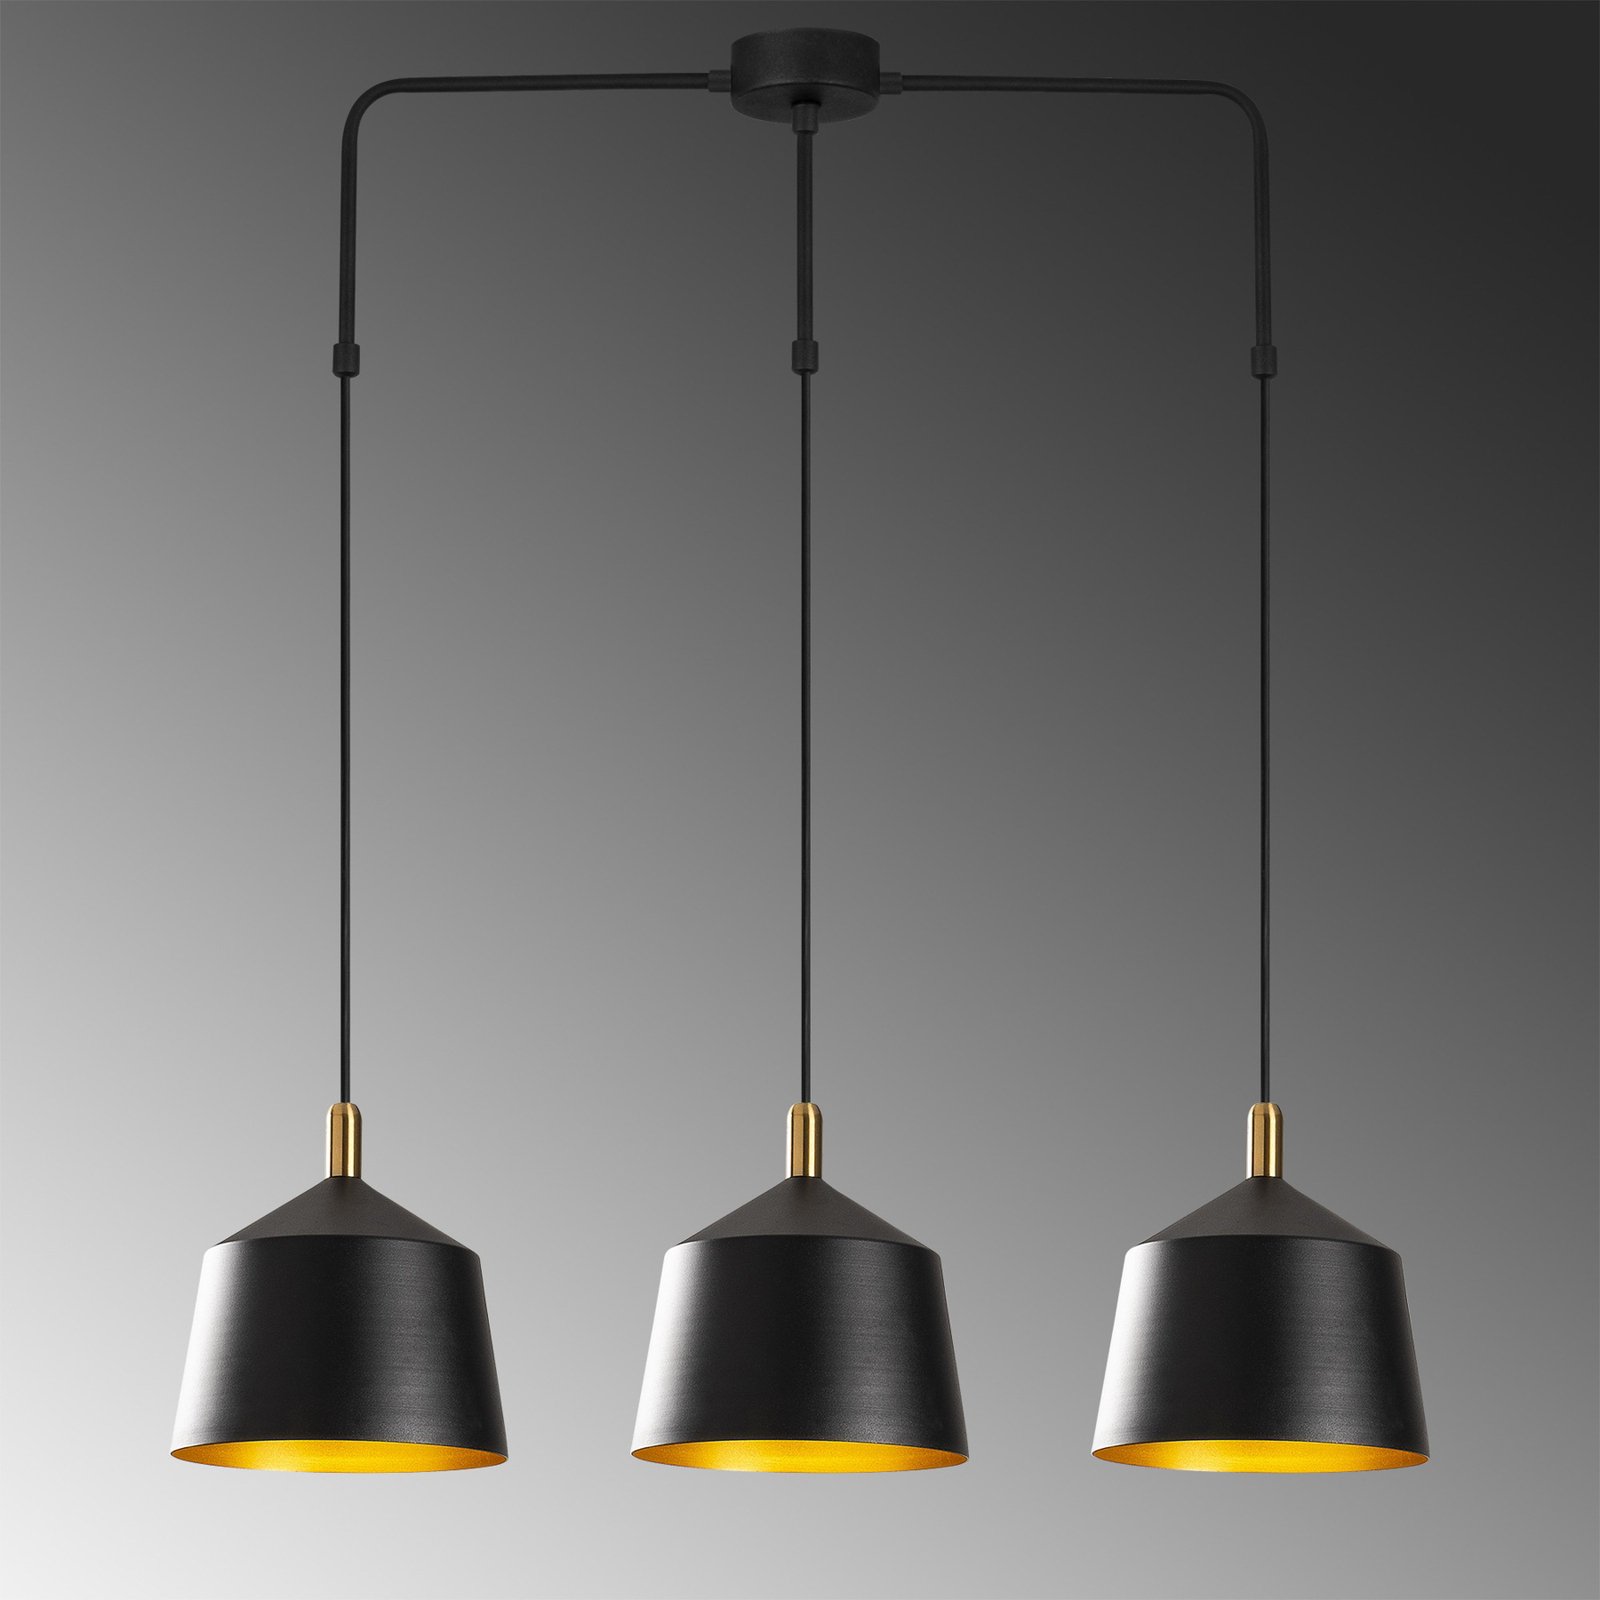 Hanglamp Saglam 3778 3-lamps lineair zwart/goud